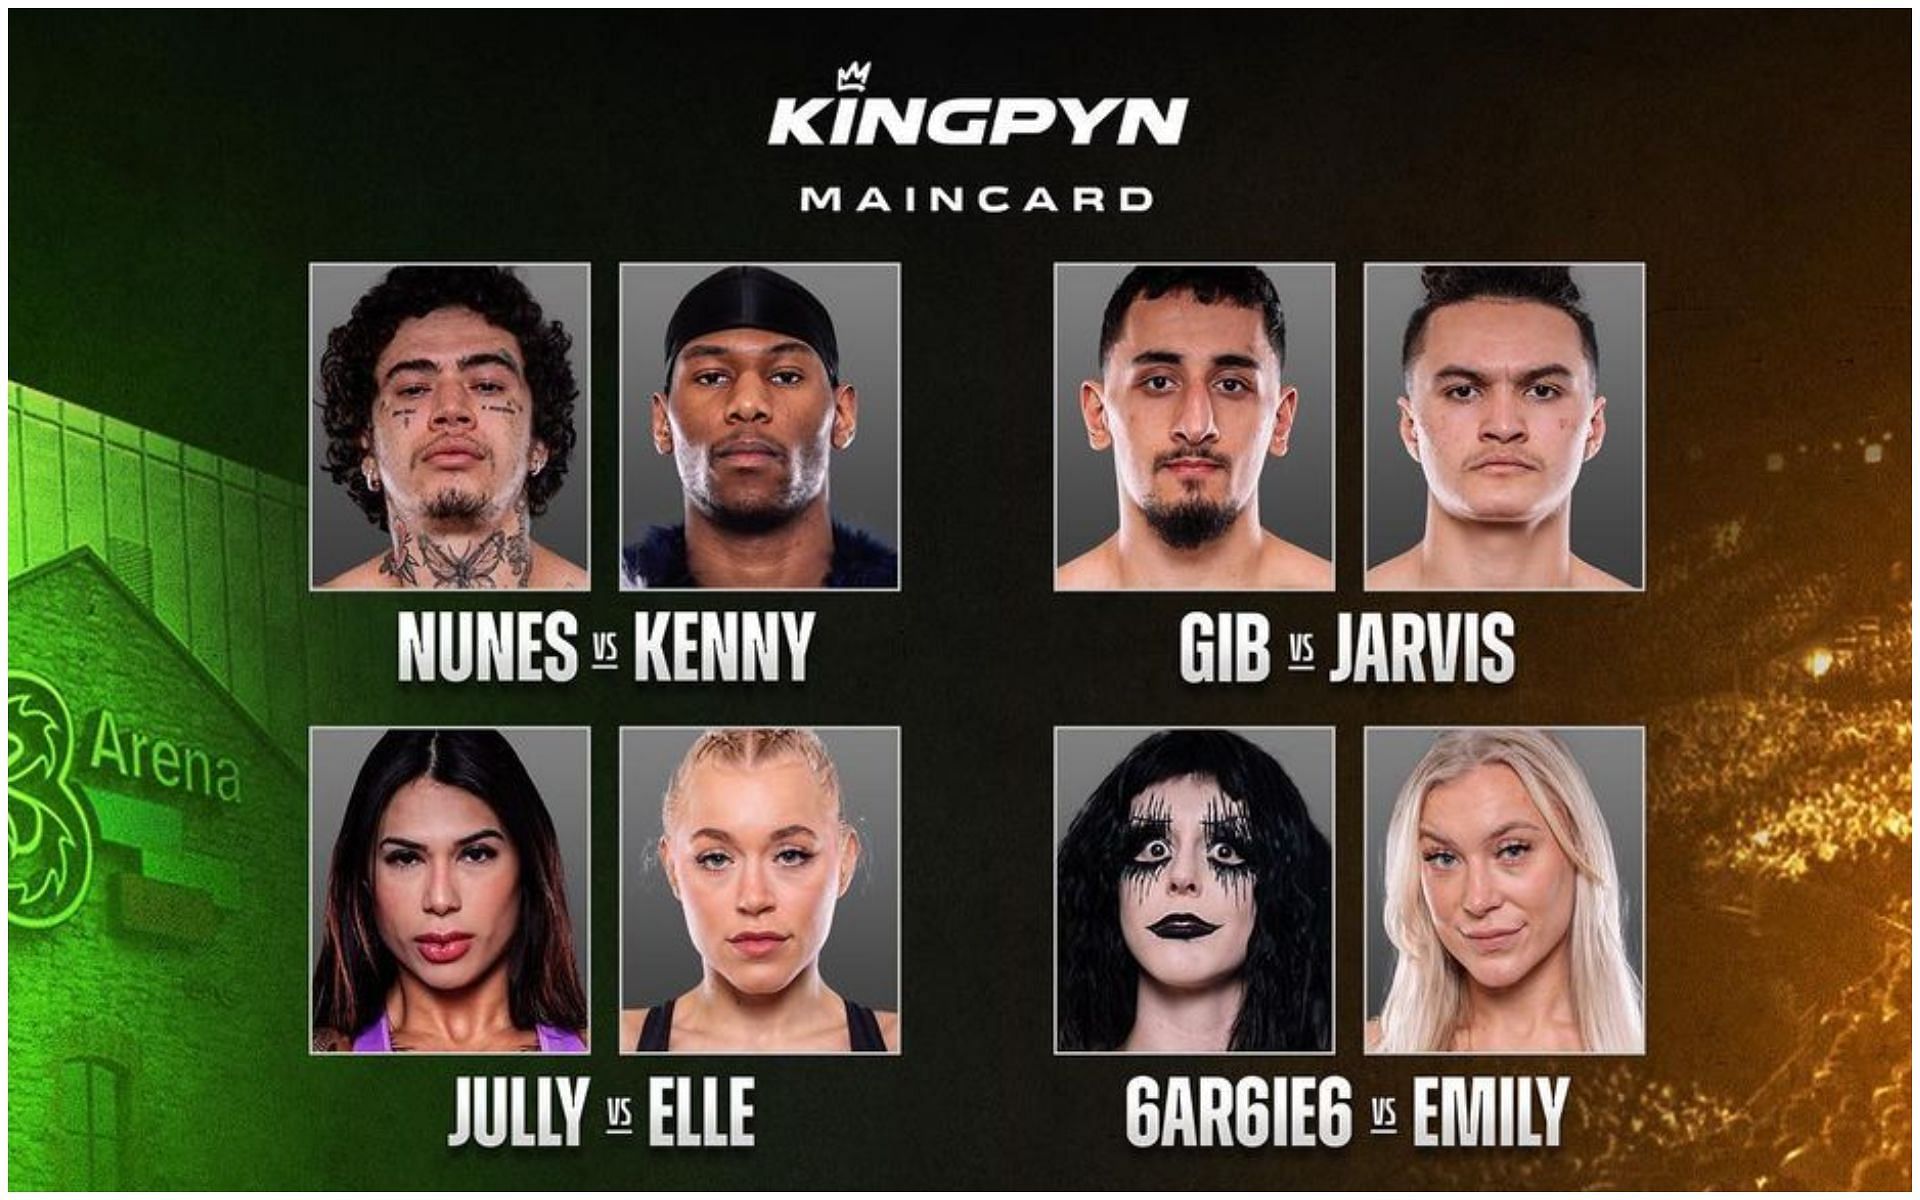 KingPyn bankrupt What is KingPyn? Influencer boxing league goes bankrupt, cancels second-ever event